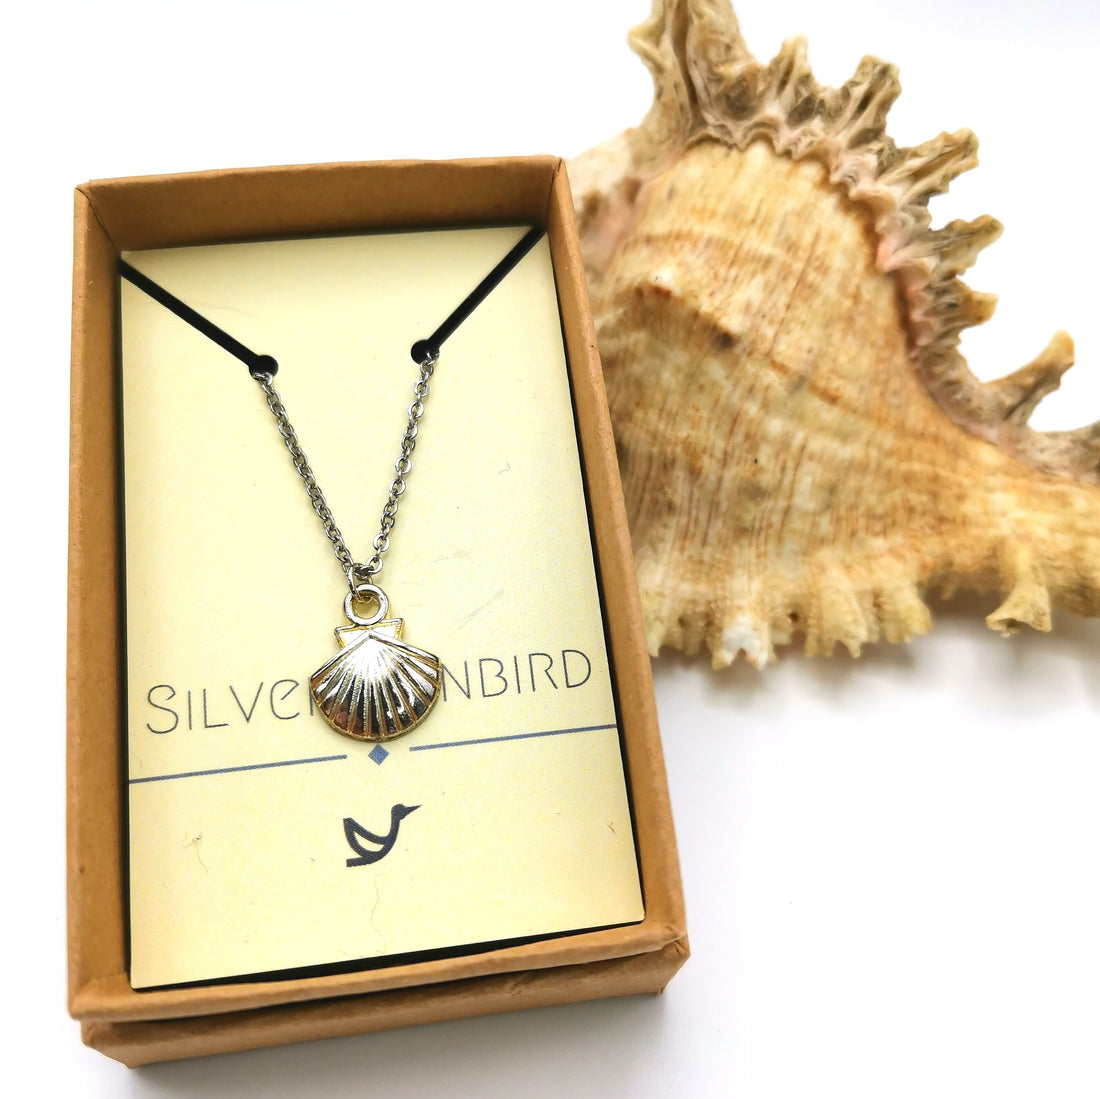 Sunshine Seashell Anklet - Silver Sunbird Anklets